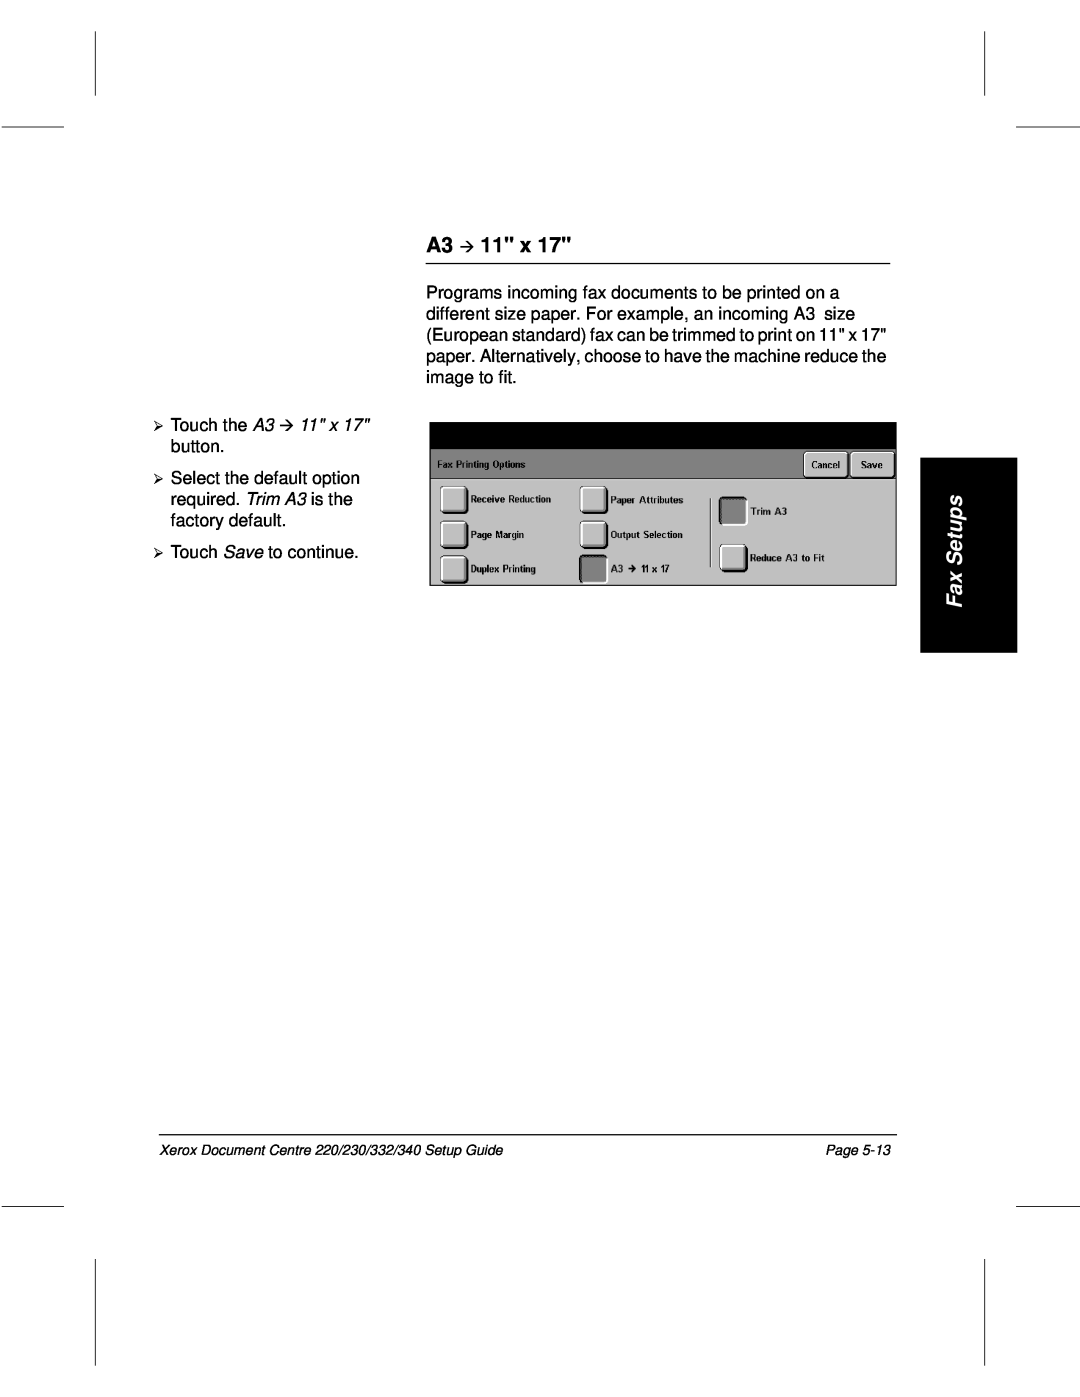 Xerox 230, 340, 332, 220 setup guide Fax Setups, Touch the A3 ∪ 11 x 